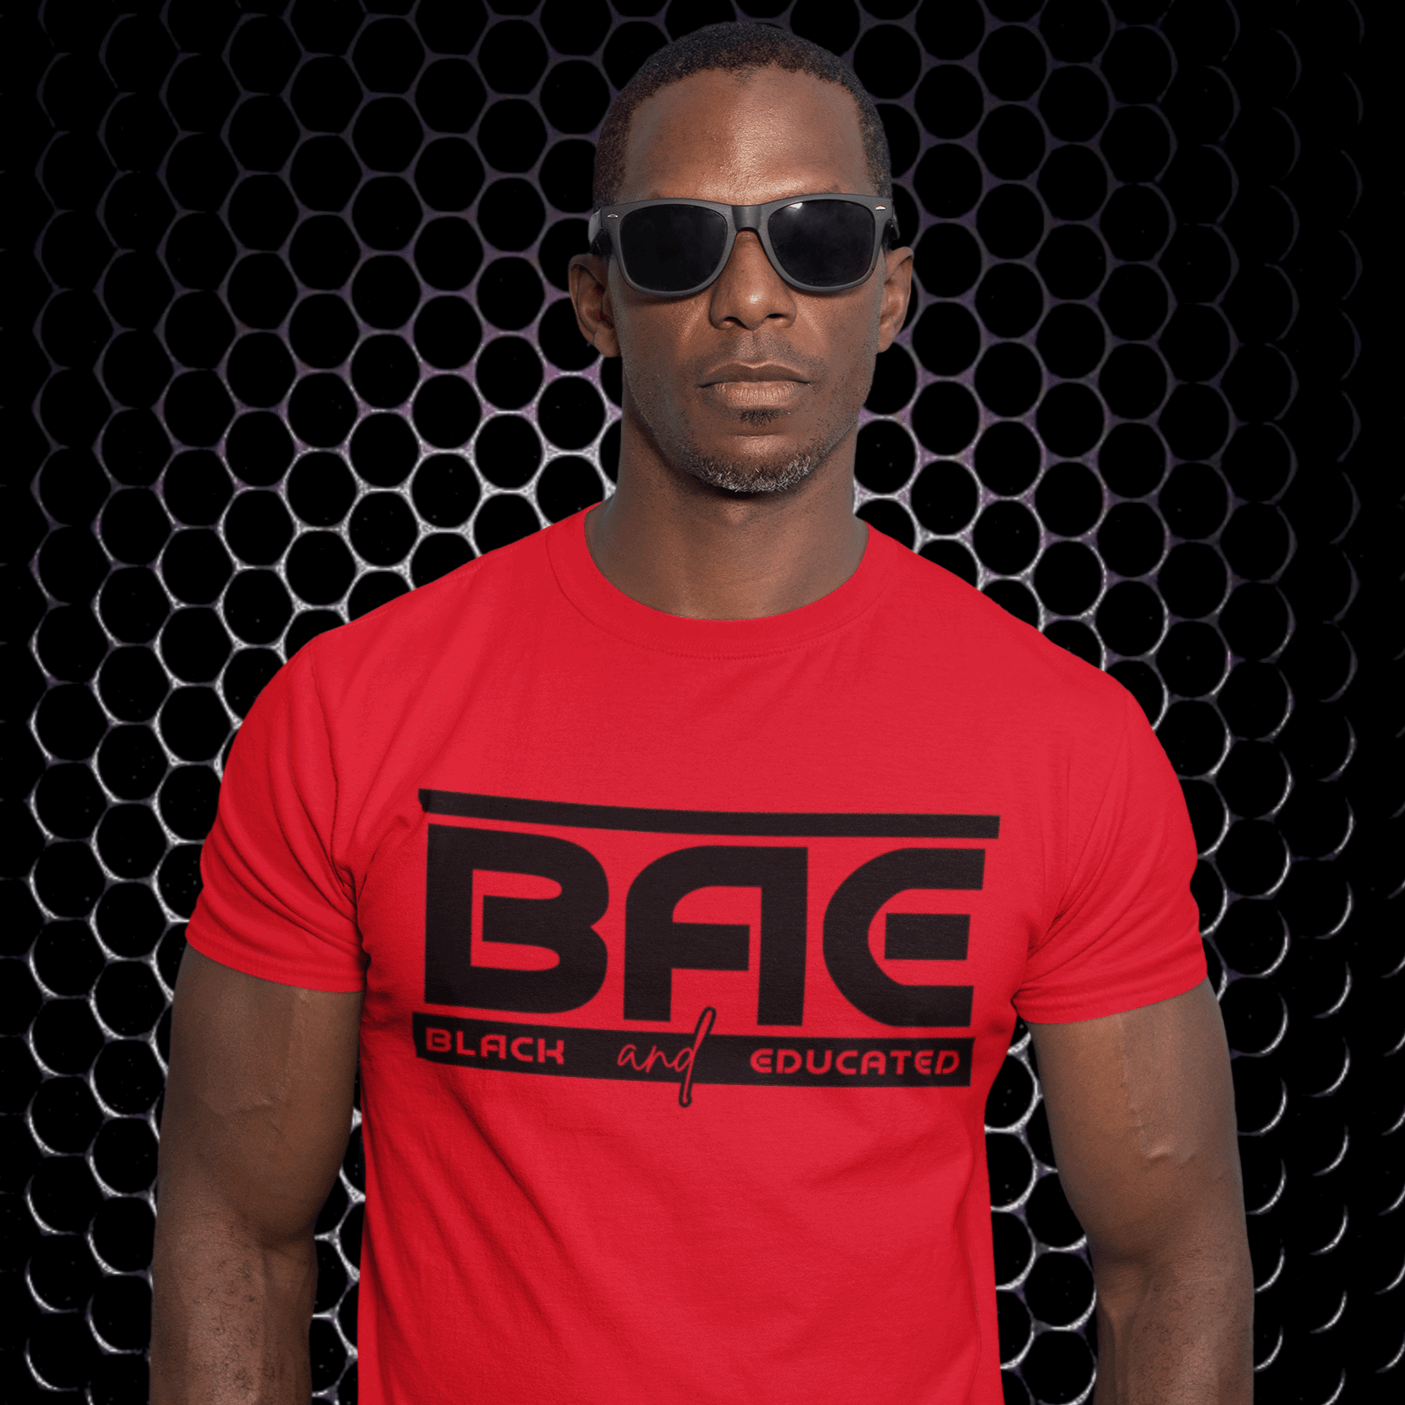 BAE Shirt Black and Educated Shirt, black history shirt, black history month shirts - Wilson Design Group